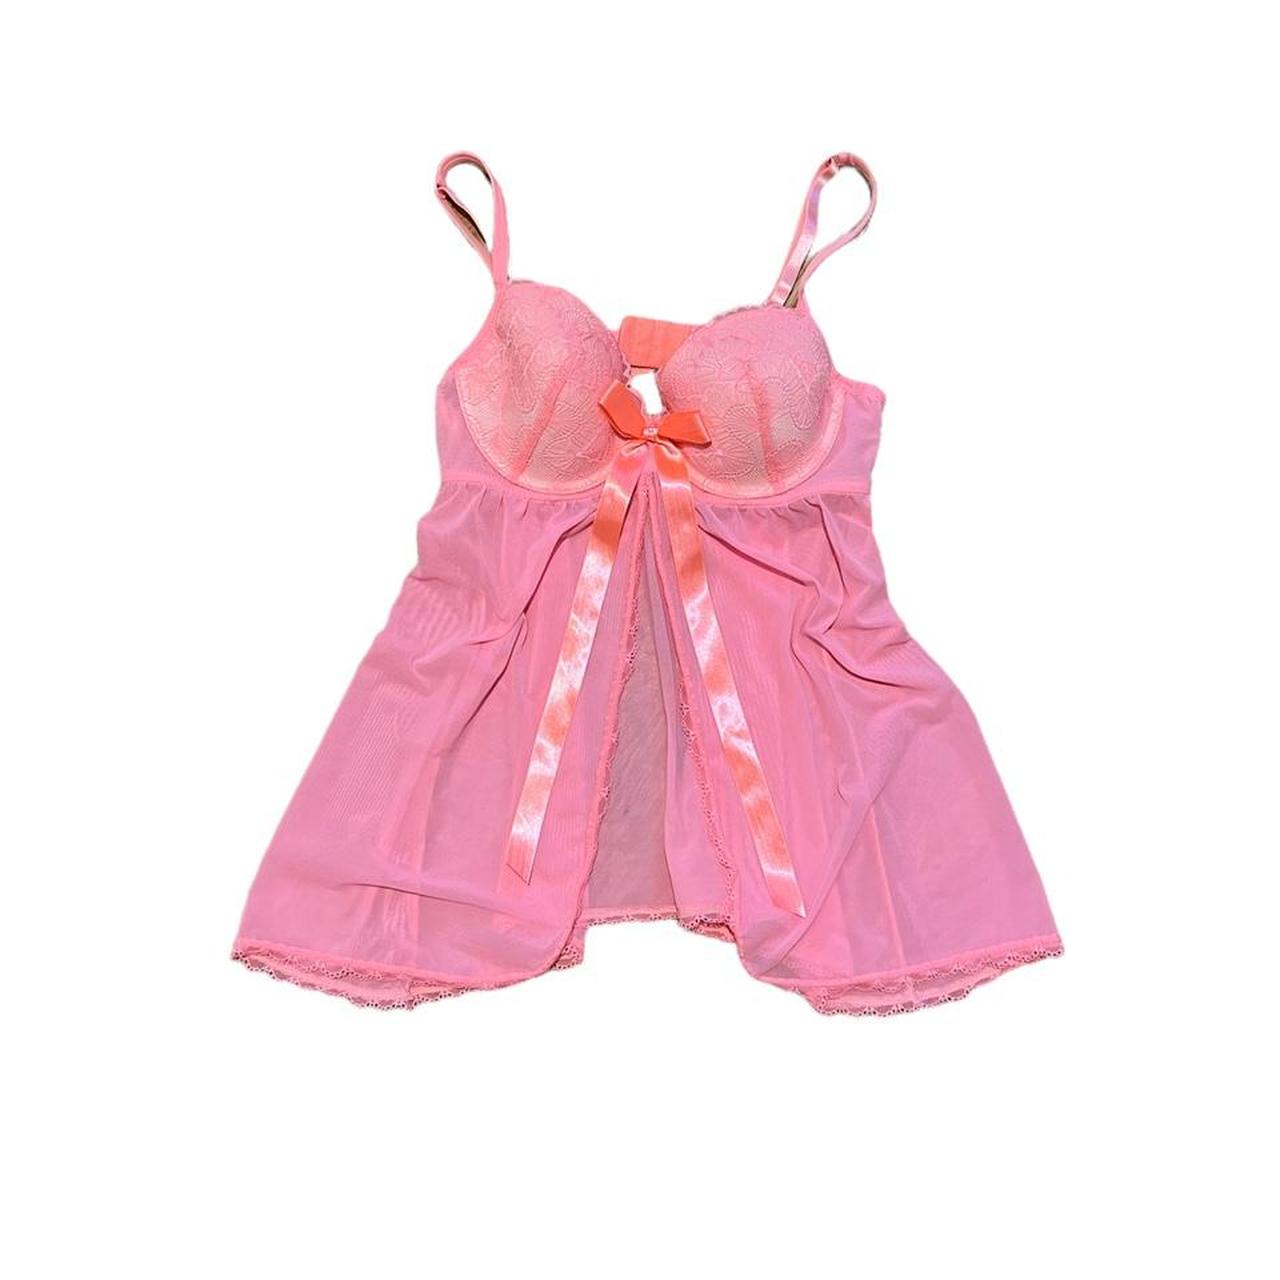 Cutest pink y2k bustier babydoll micro mesh top with... - Depop